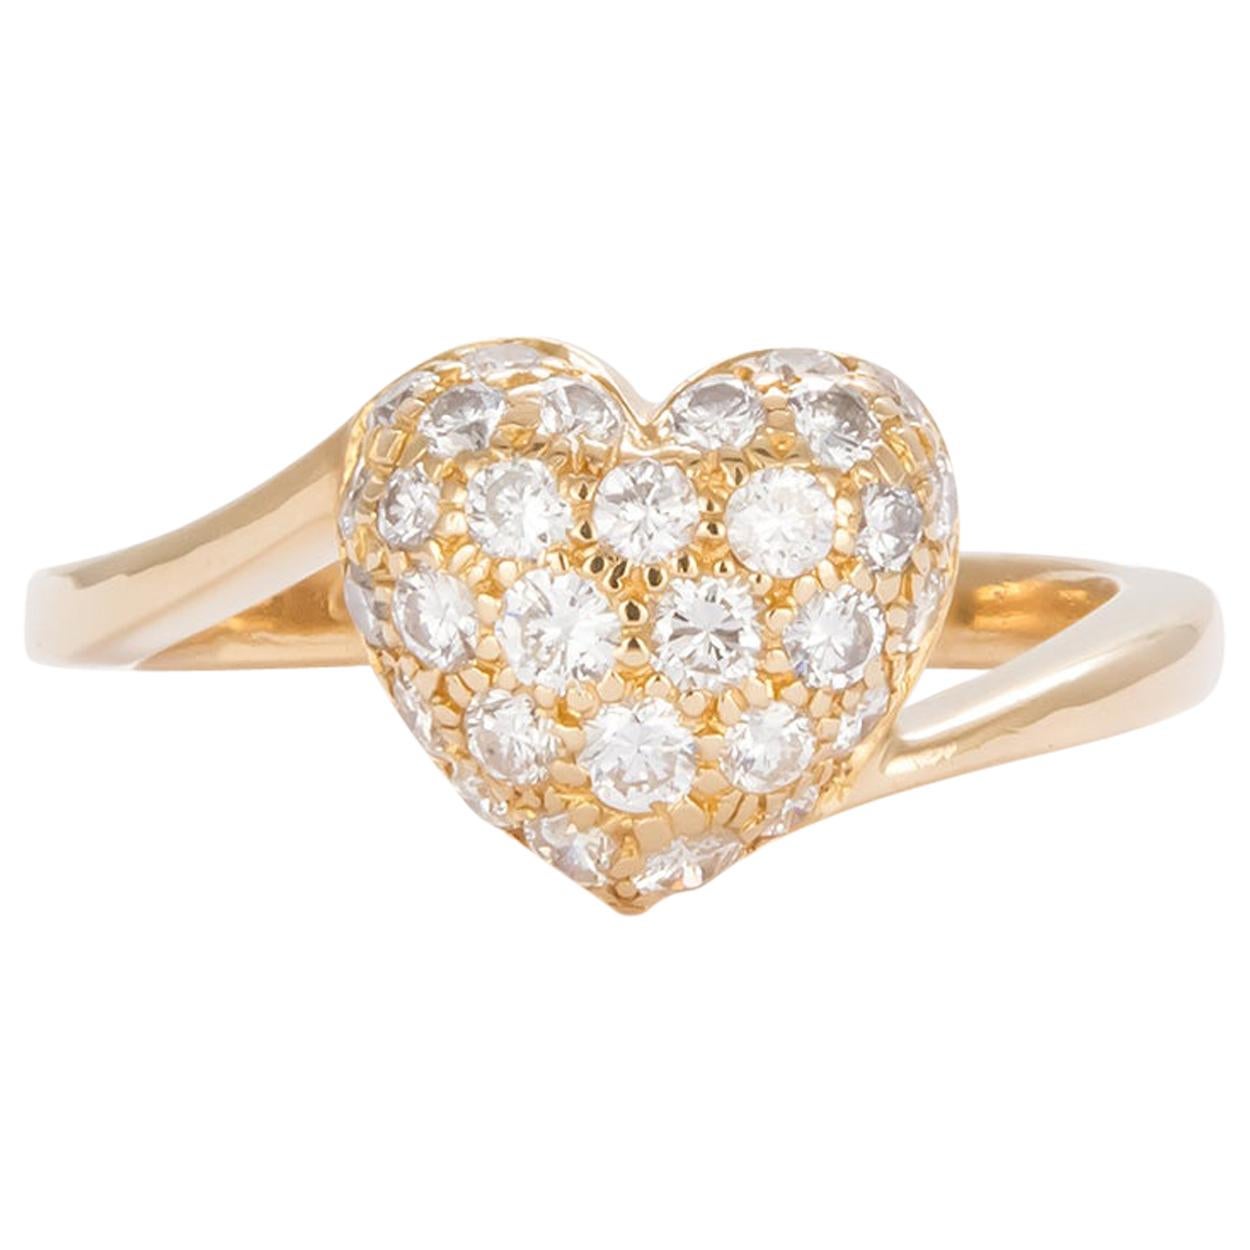 Authentic Cartier 18 Karat Yellow Gold Diamond Pave Heart Ring